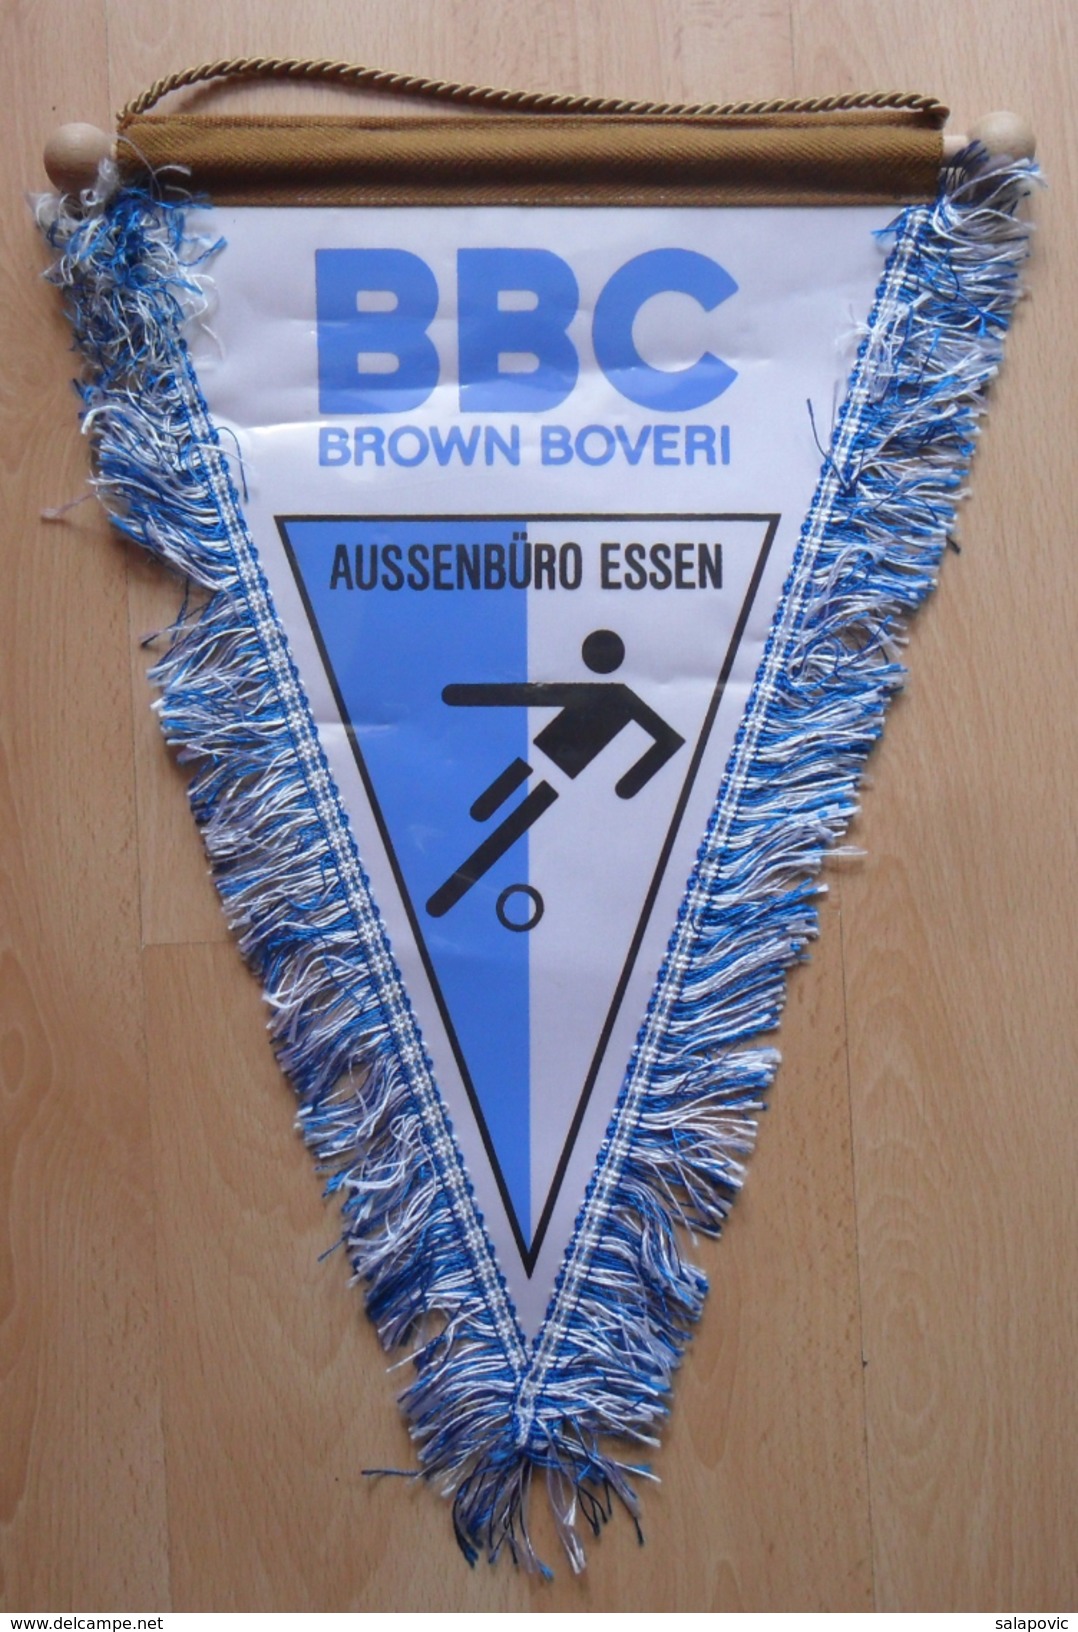 BBC BROWN BOVERI AUSSENBURO ESSEN  GERMANY  FOOTBALL CLUB, SOCCER / FUTBOL / CALCIO, OLD PENNANT, SPORTS FLAG - Bekleidung, Souvenirs Und Sonstige